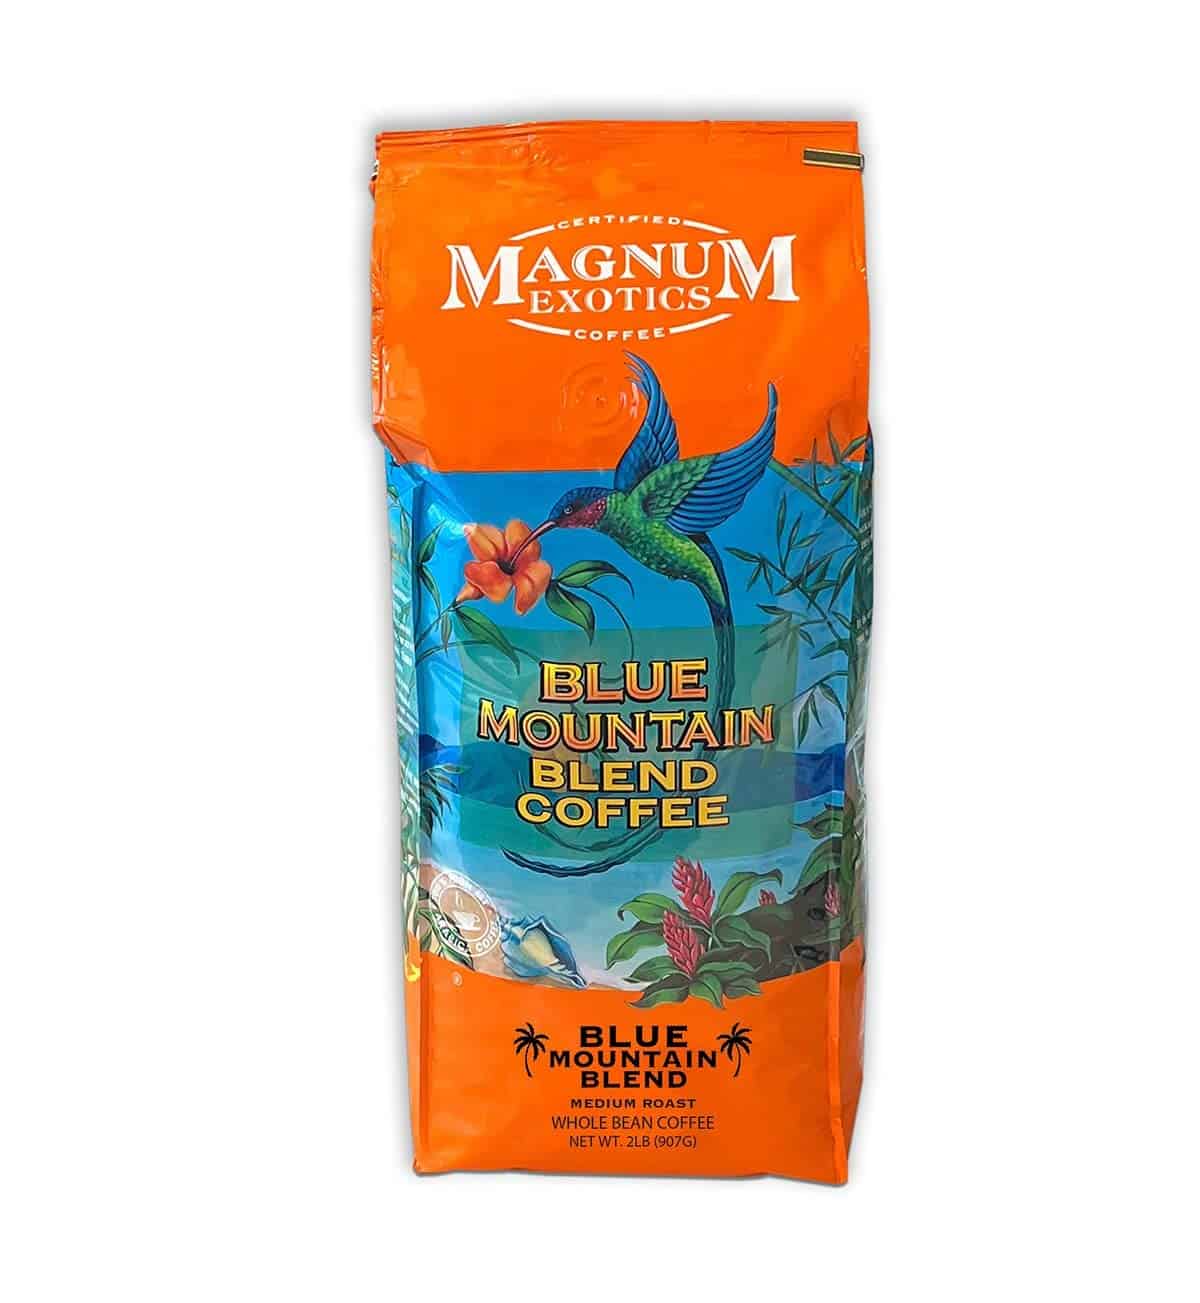 Magnum exotics coffee beans in a bag. 